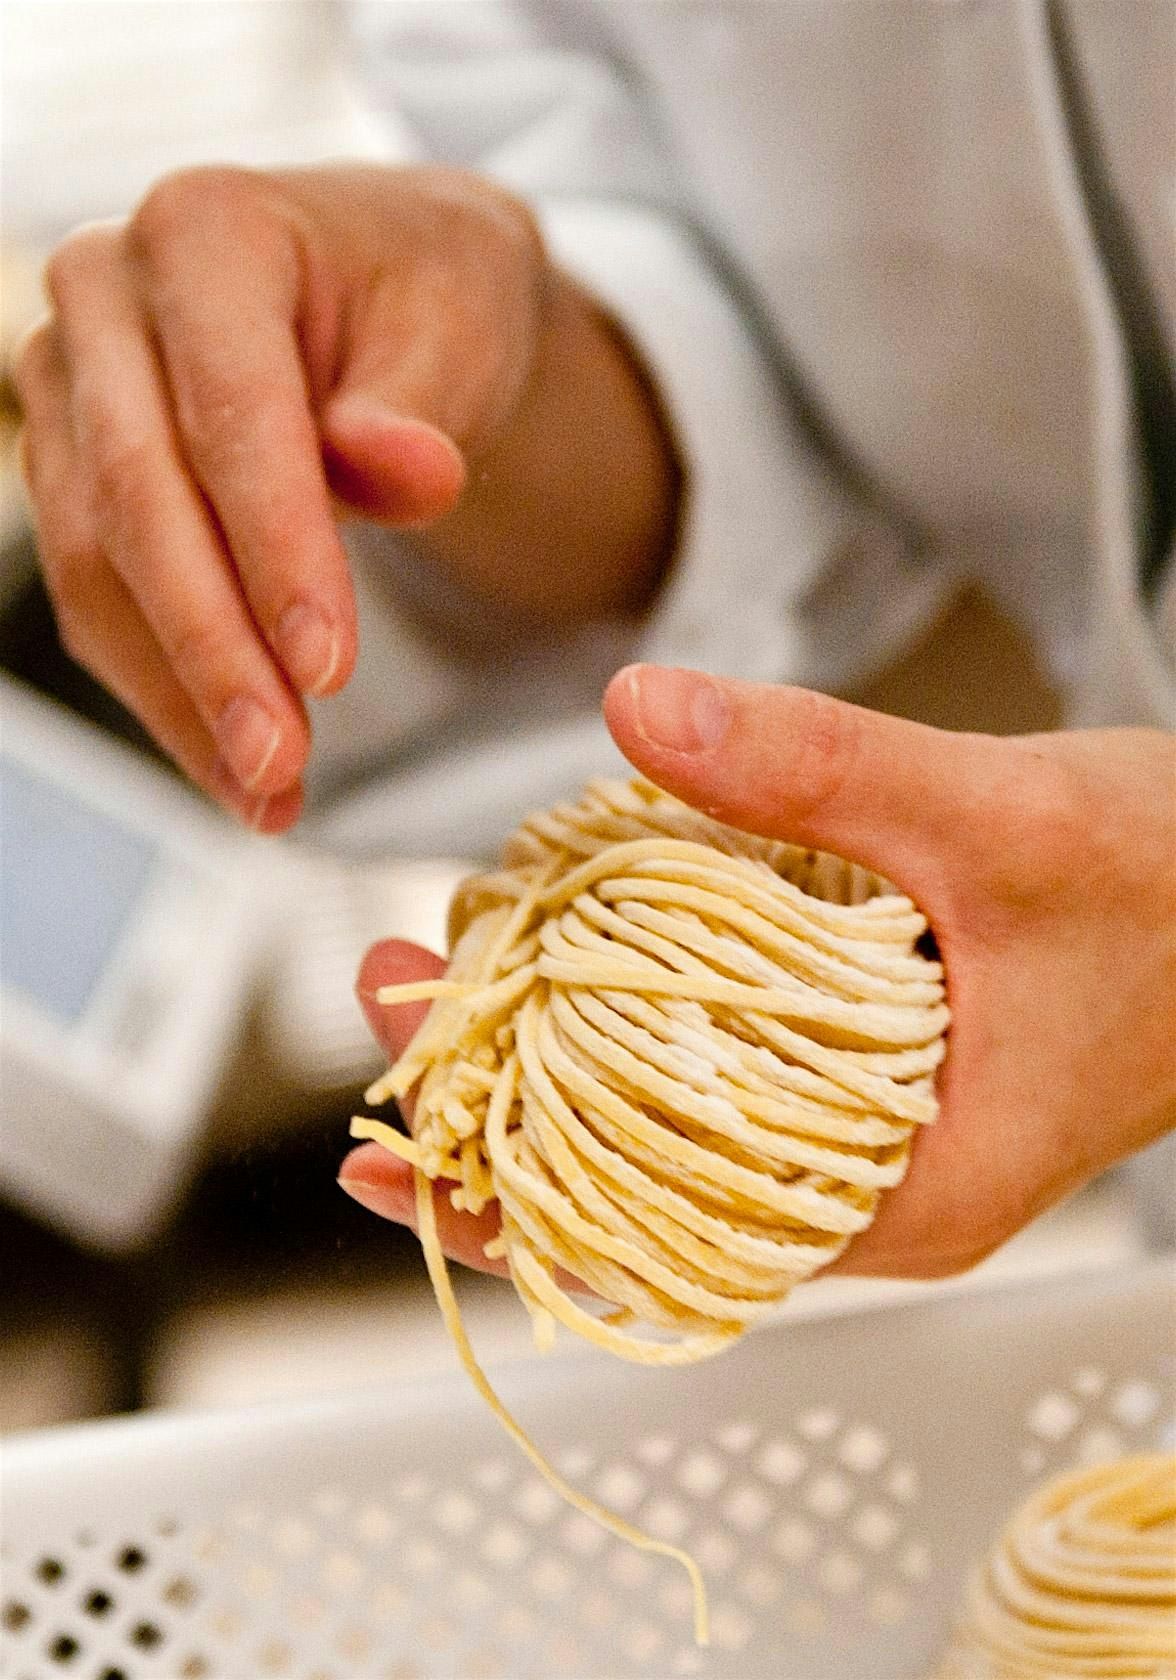 Hands-On Fresh Pasta-Making 101 Workshop at 12:00pm